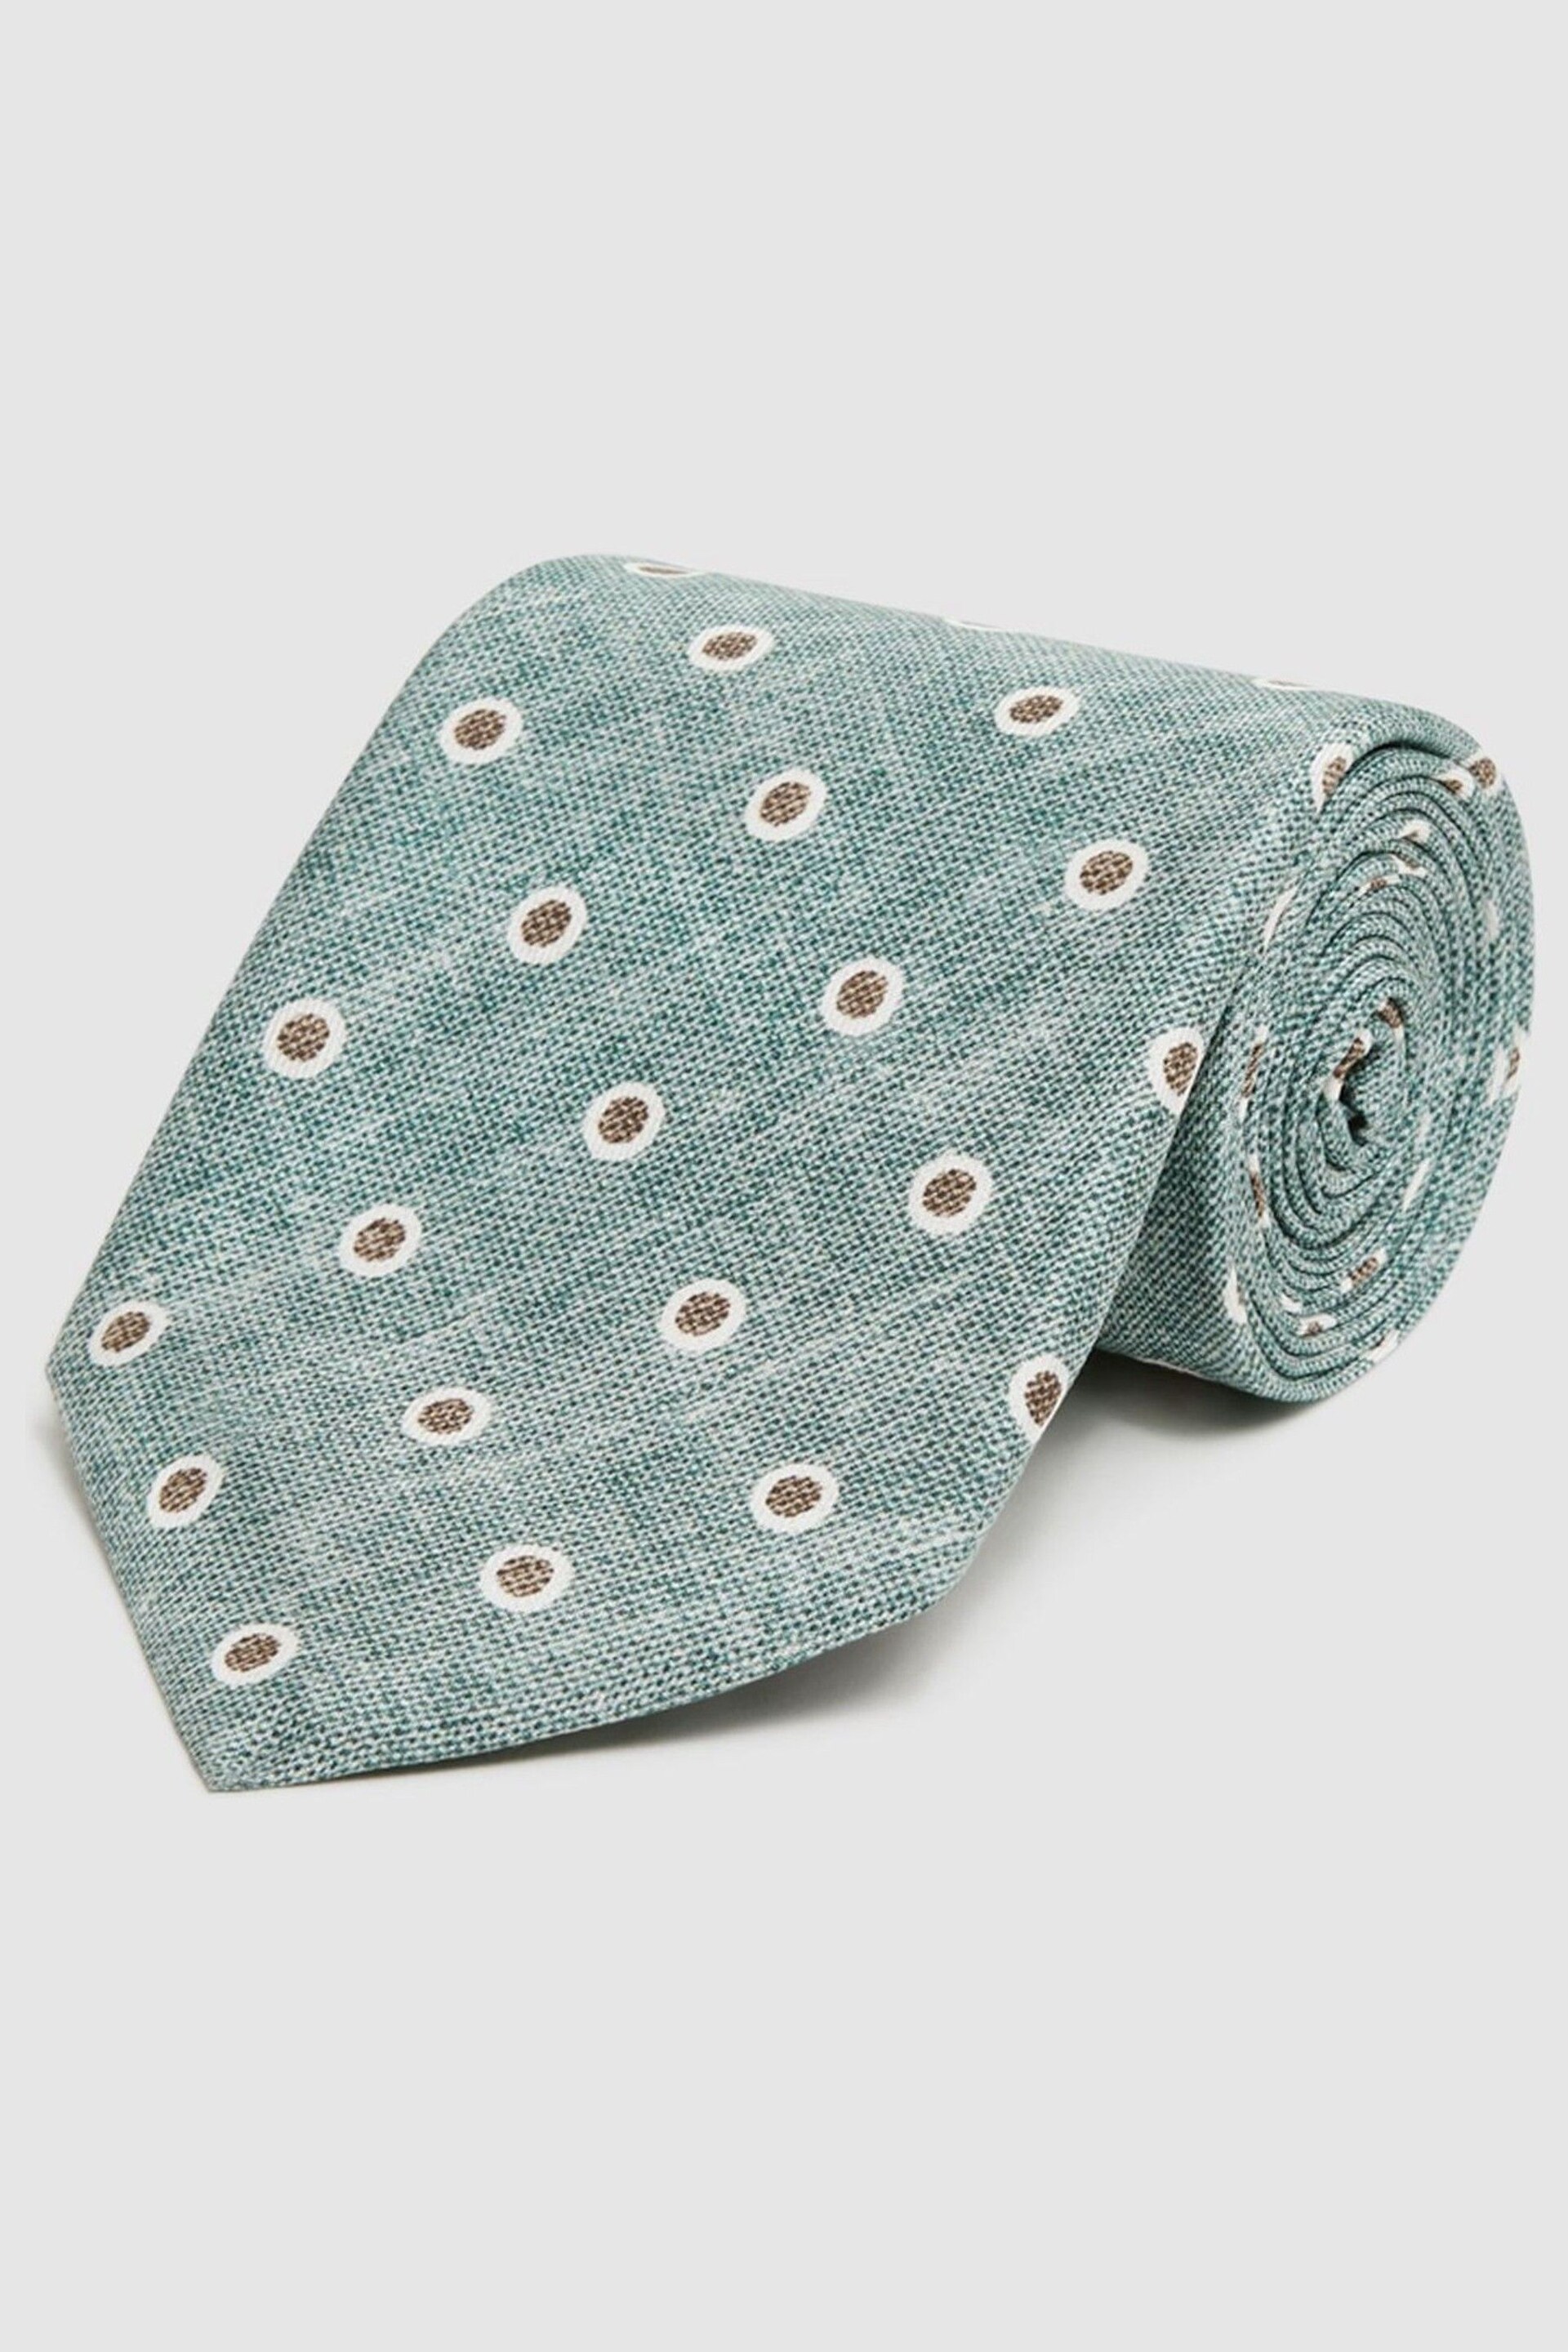 Reiss Sea Green Melange Porto Silk Polka Dot Print Tie - Image 3 of 5